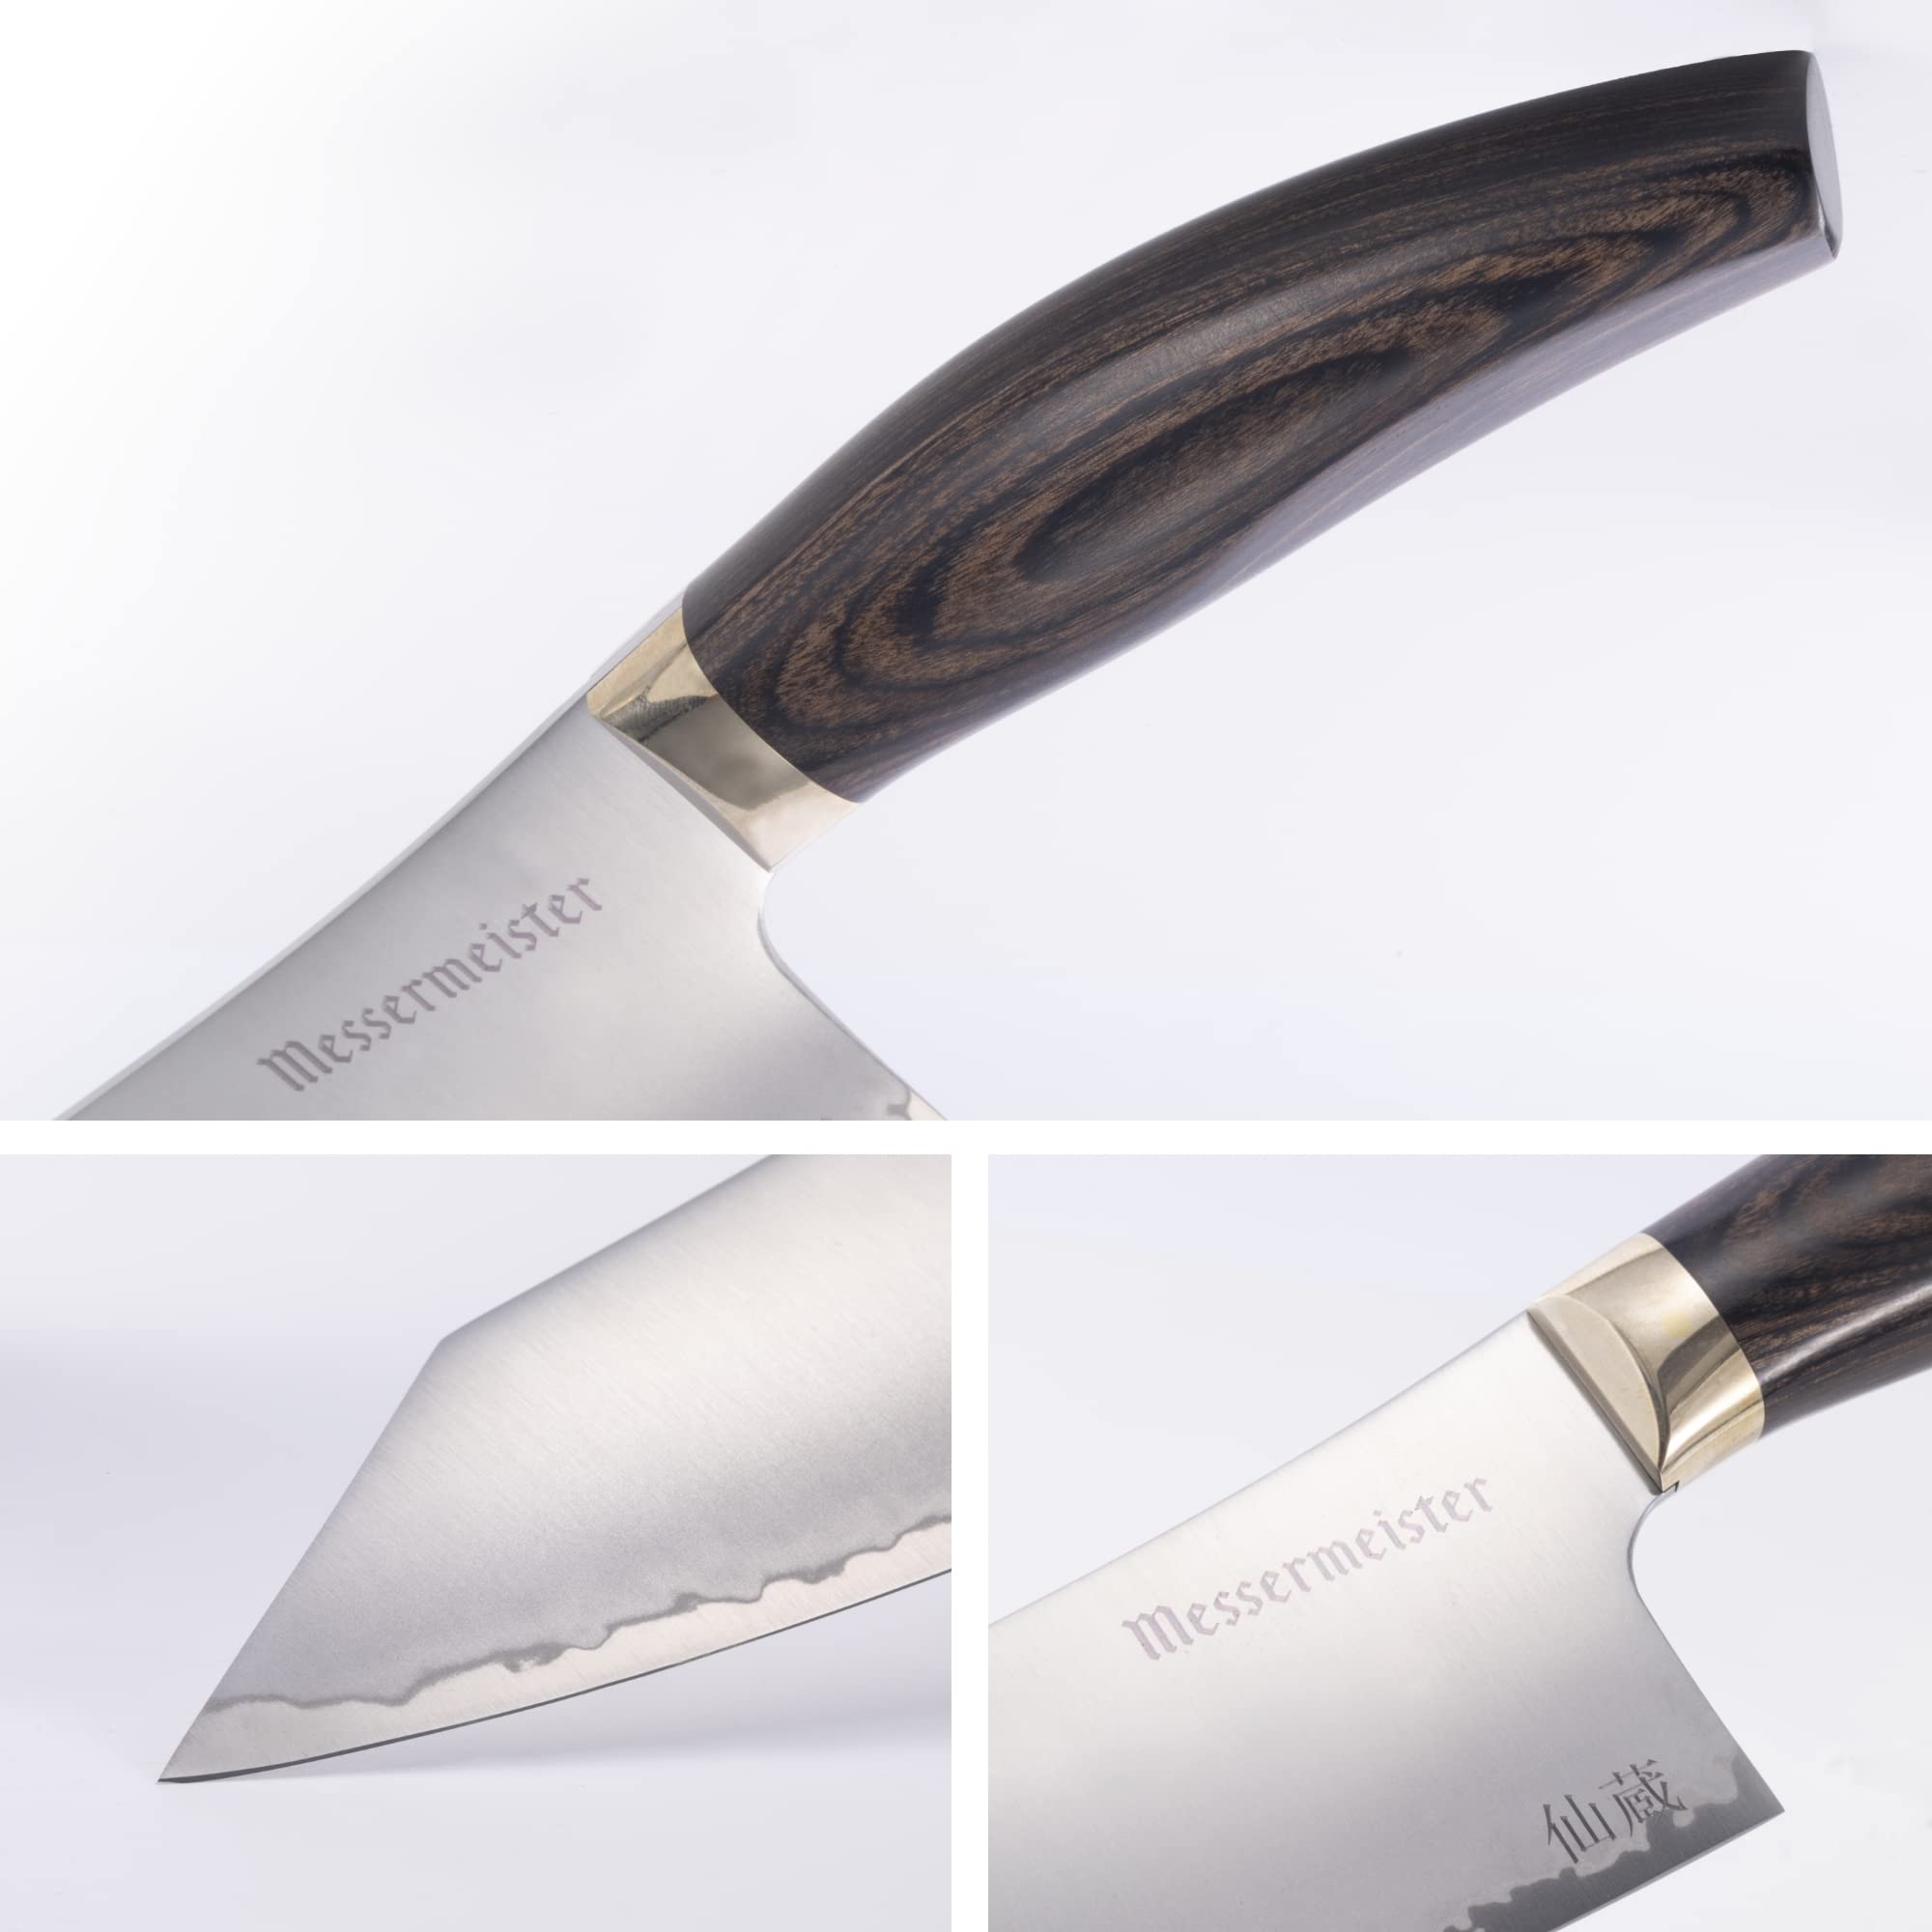 Messermeister Kawashima 6” Utility Knife - SG2 Powdered Steel, Eco-Brass Bolster & Walnut Pakkawood Handle - Made in Seki, Japan